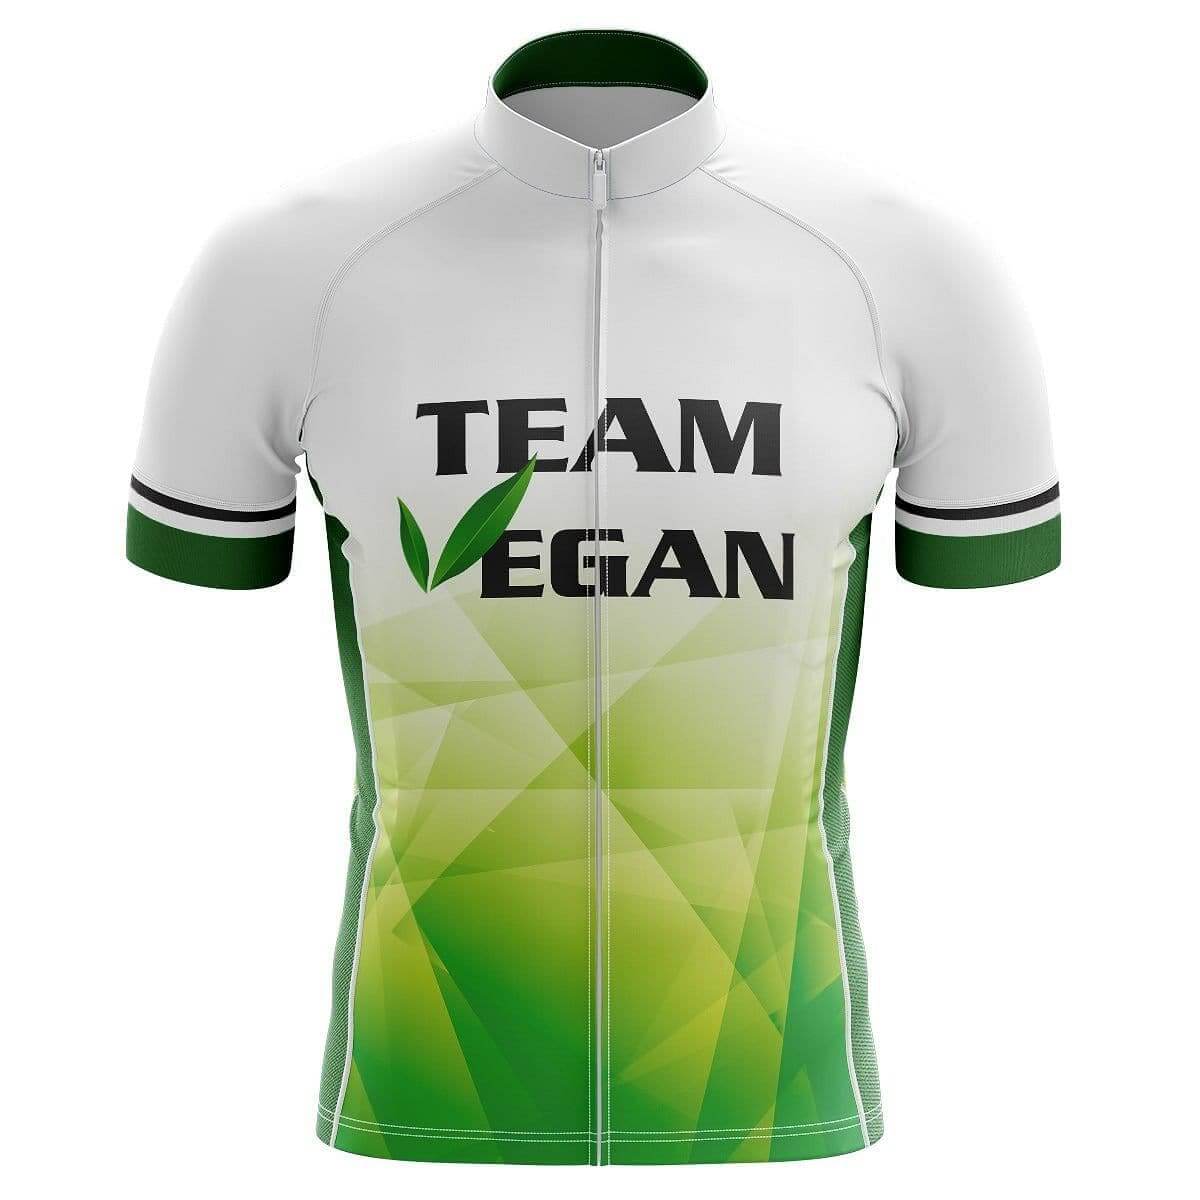 Team Vegan Cycling Jersey